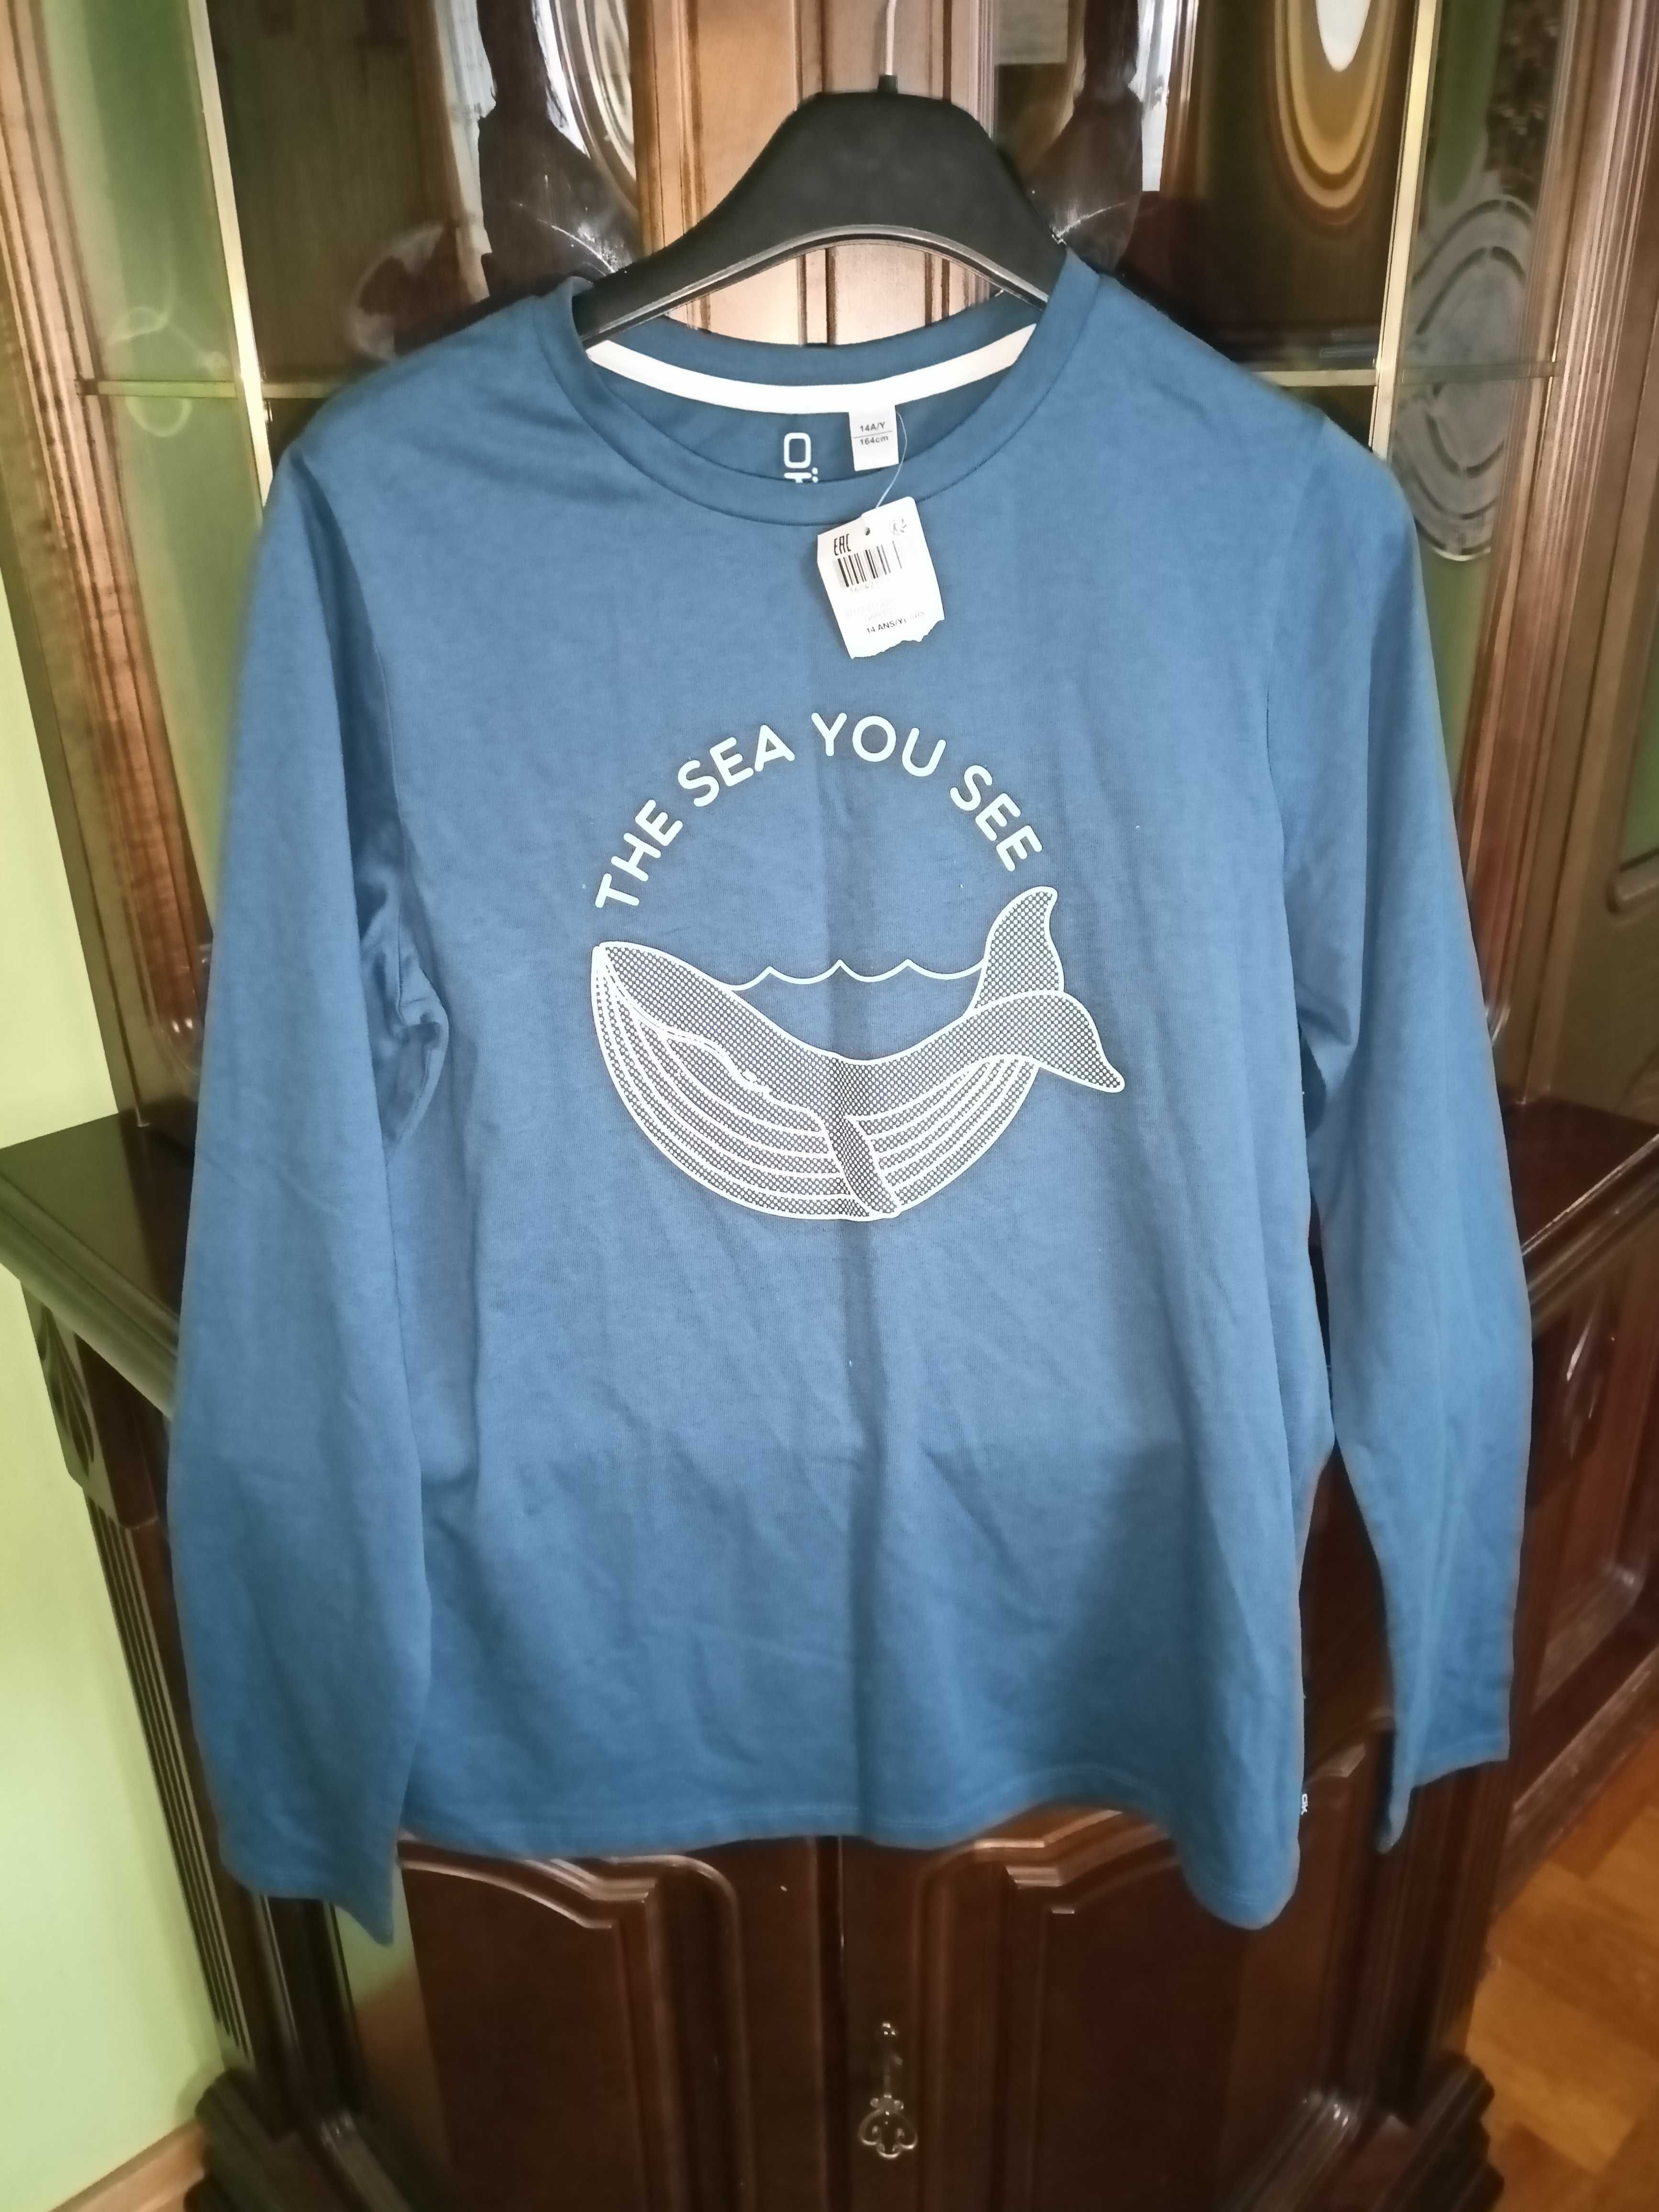 Bluza Teeshirt "The sea you see" na chłopca 14 lat